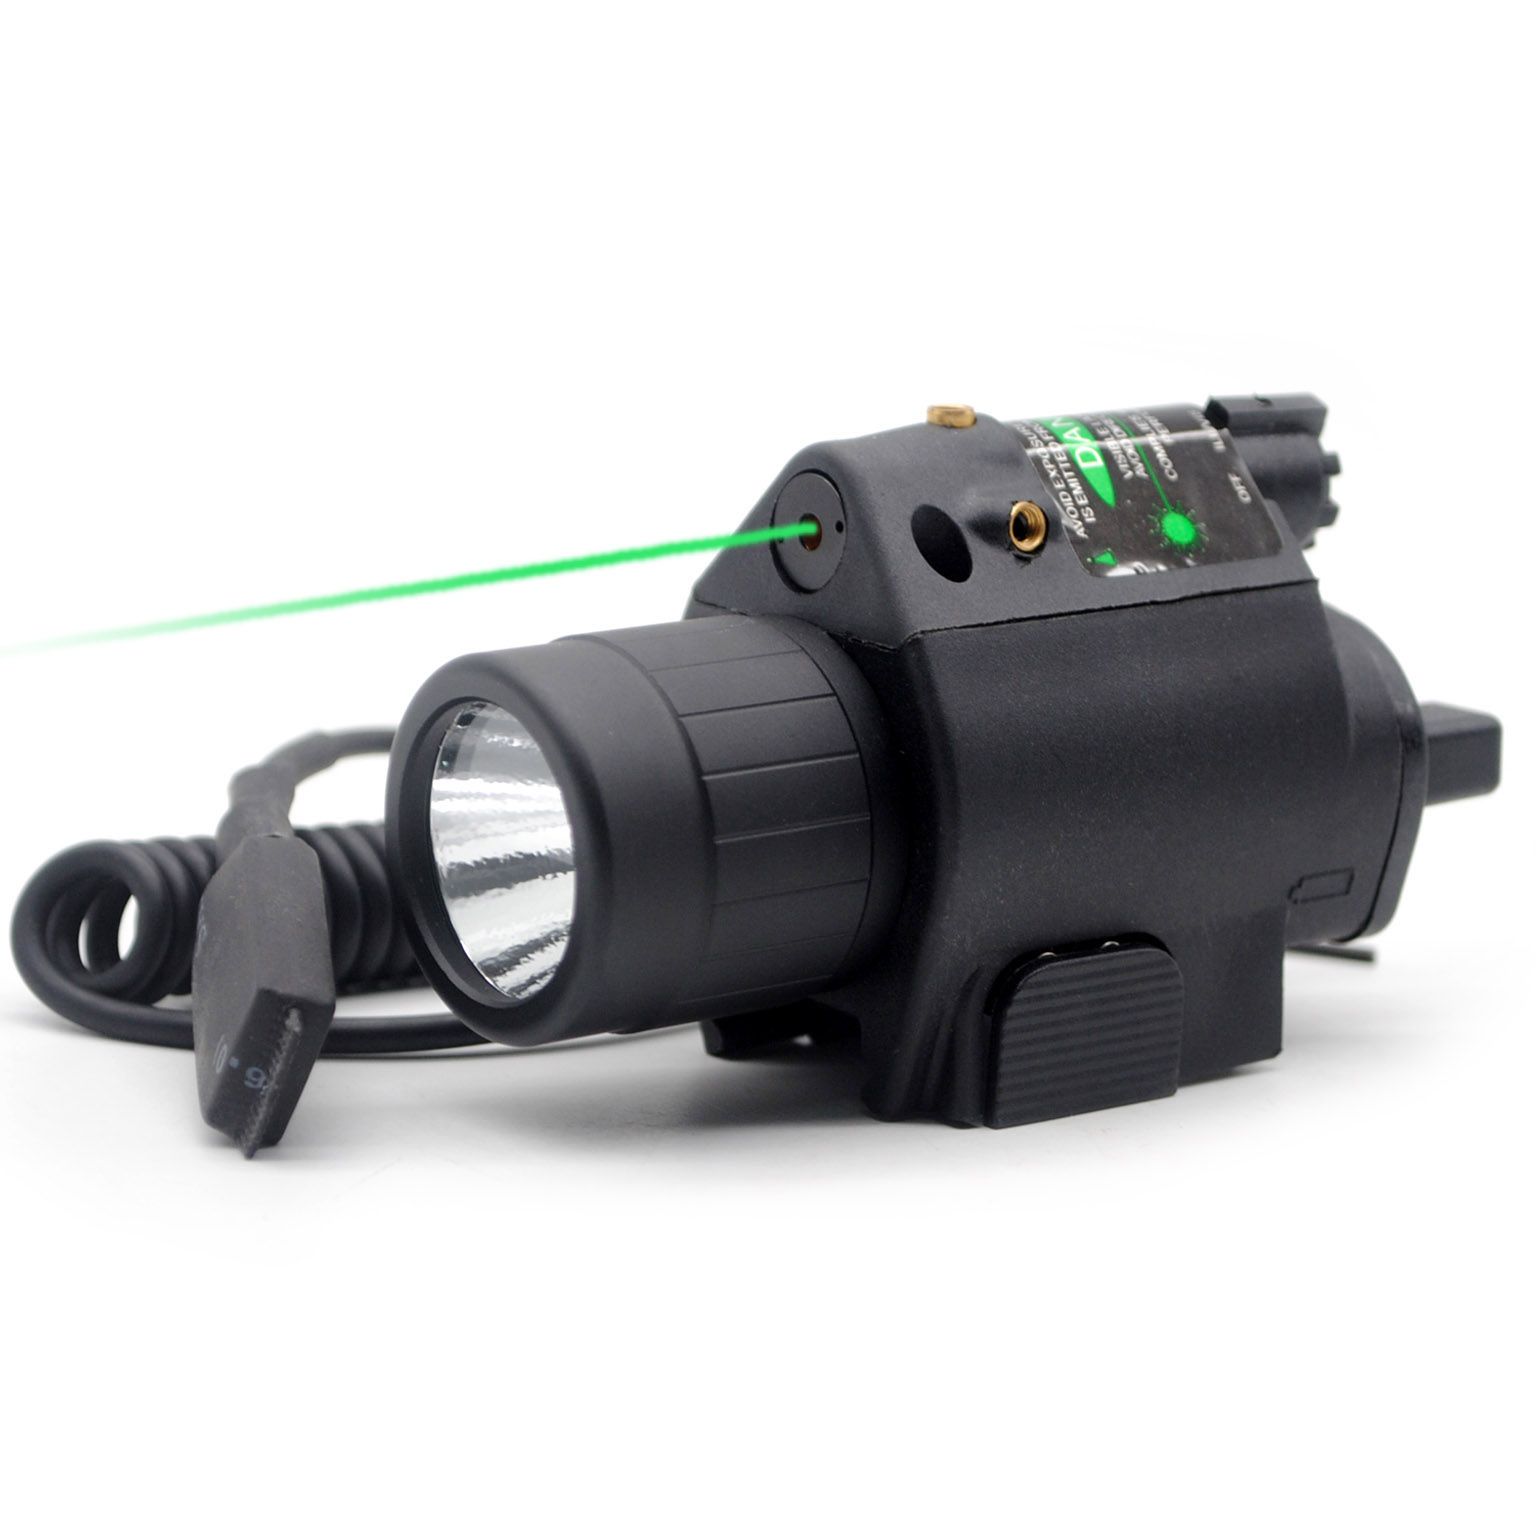 Adjustable 20mm Weaver Rail Mount Quick Release for Flashlight Torch Laser Black 